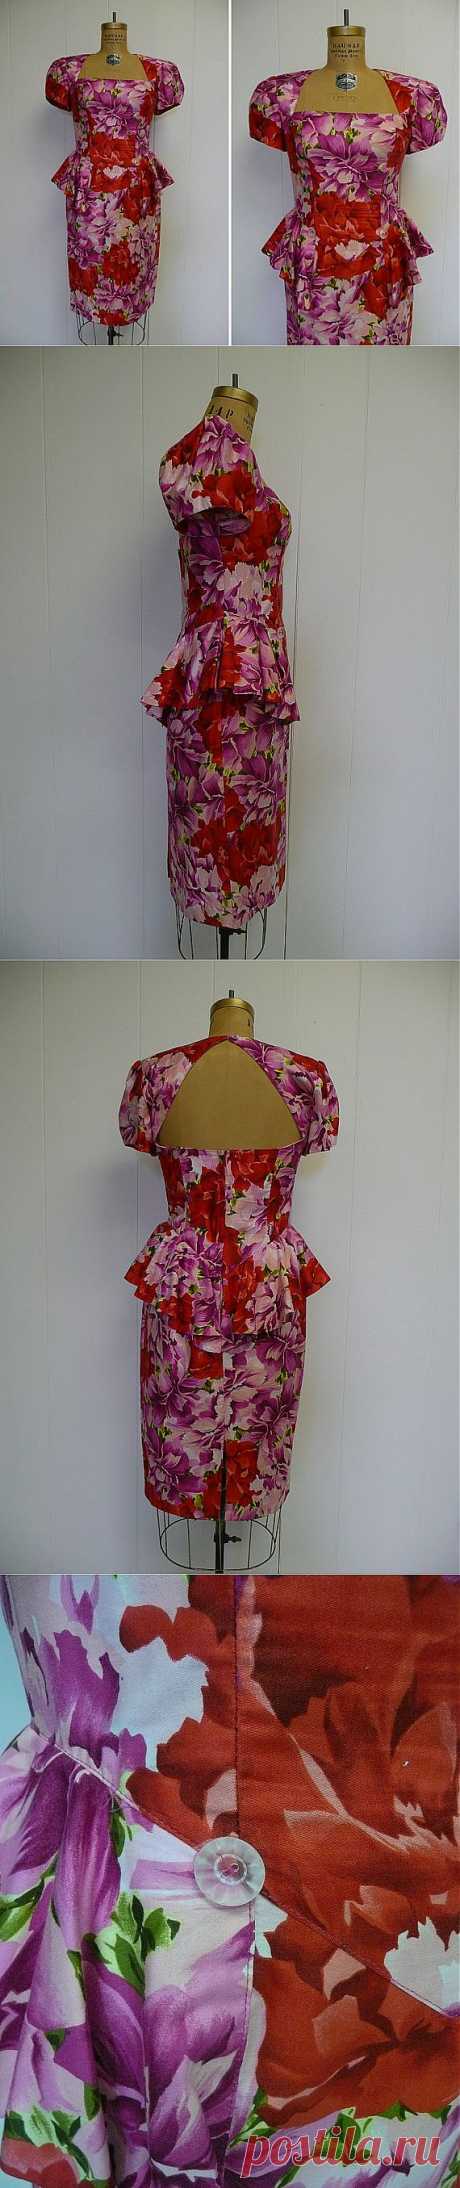 1980s Floral Peplum Dress 80s Bombshell от CreatedAndCollected